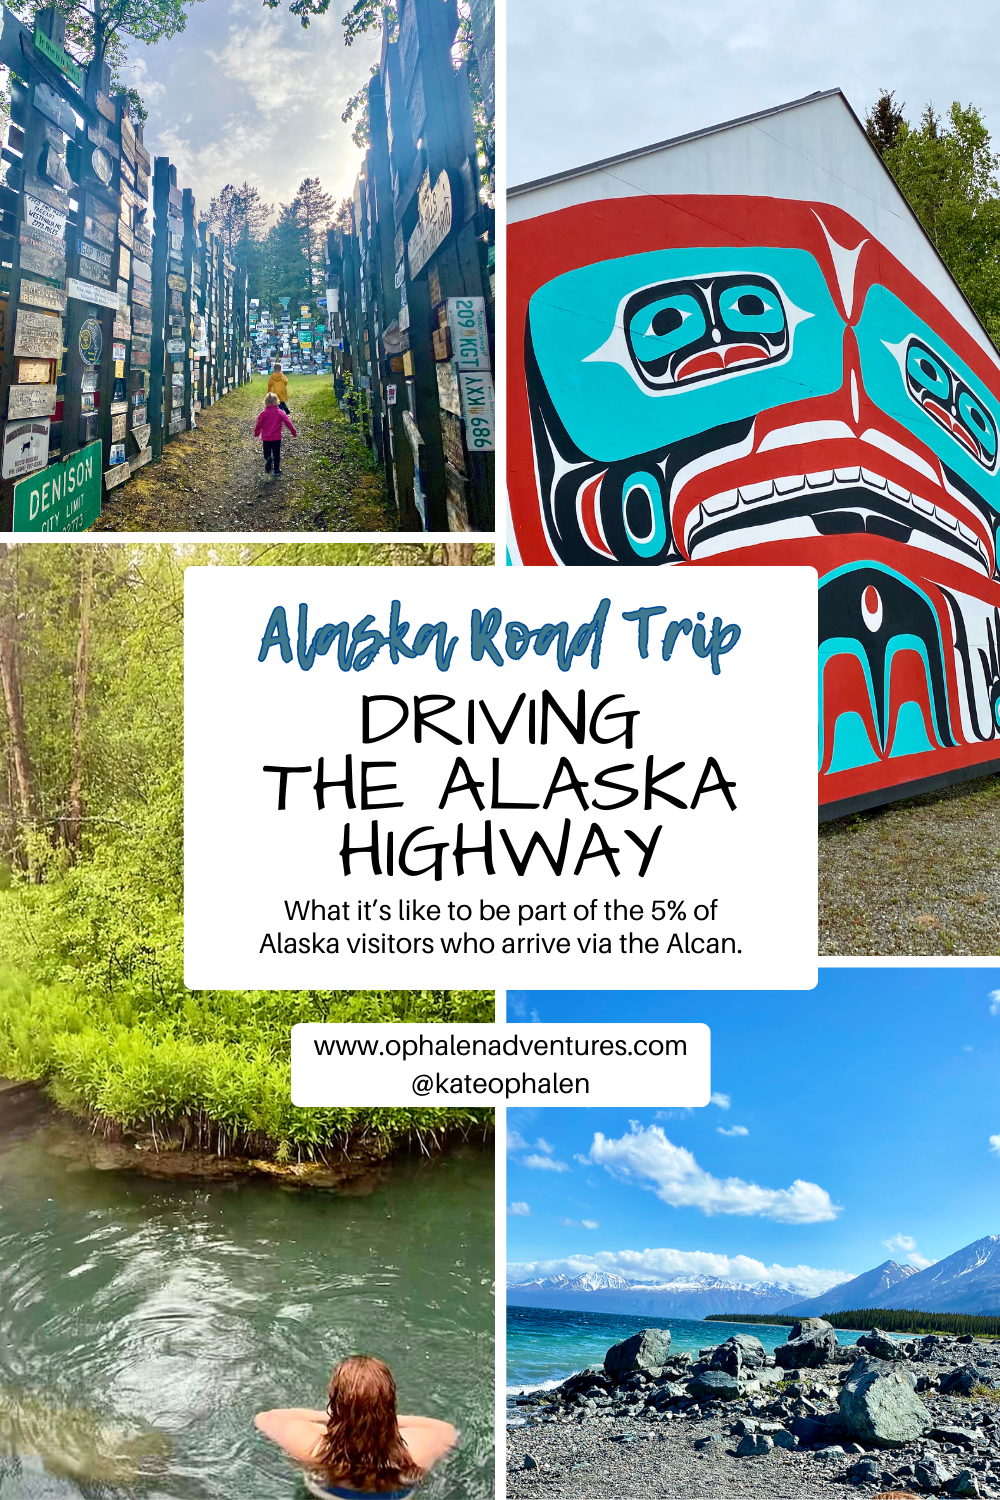 Alaska Road Trip: Driving the Alaska Highway